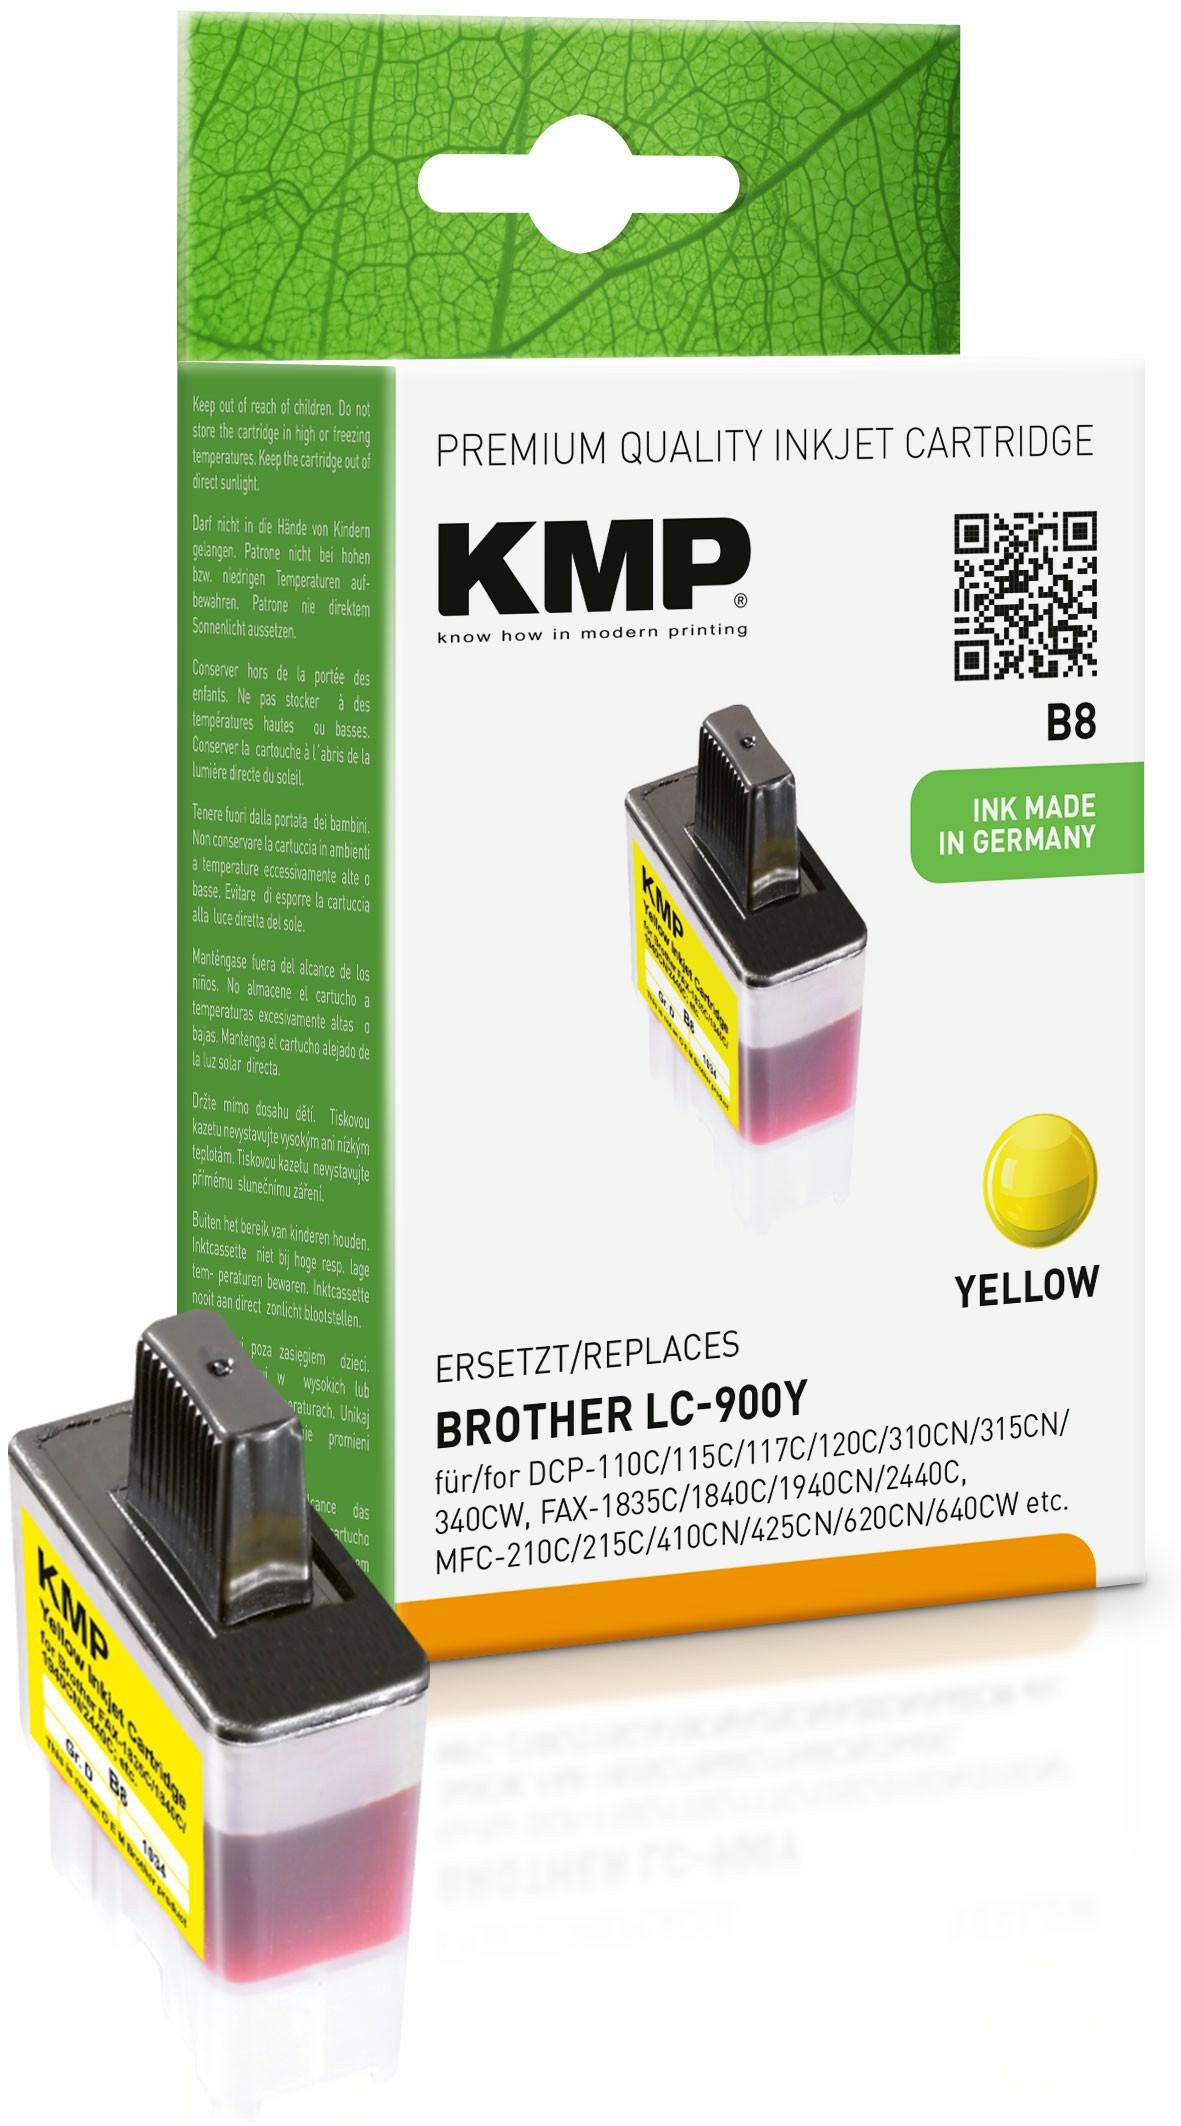 KMP-Printtechnik-AG 1034,0009 B8 ink cartridge yellow compat 